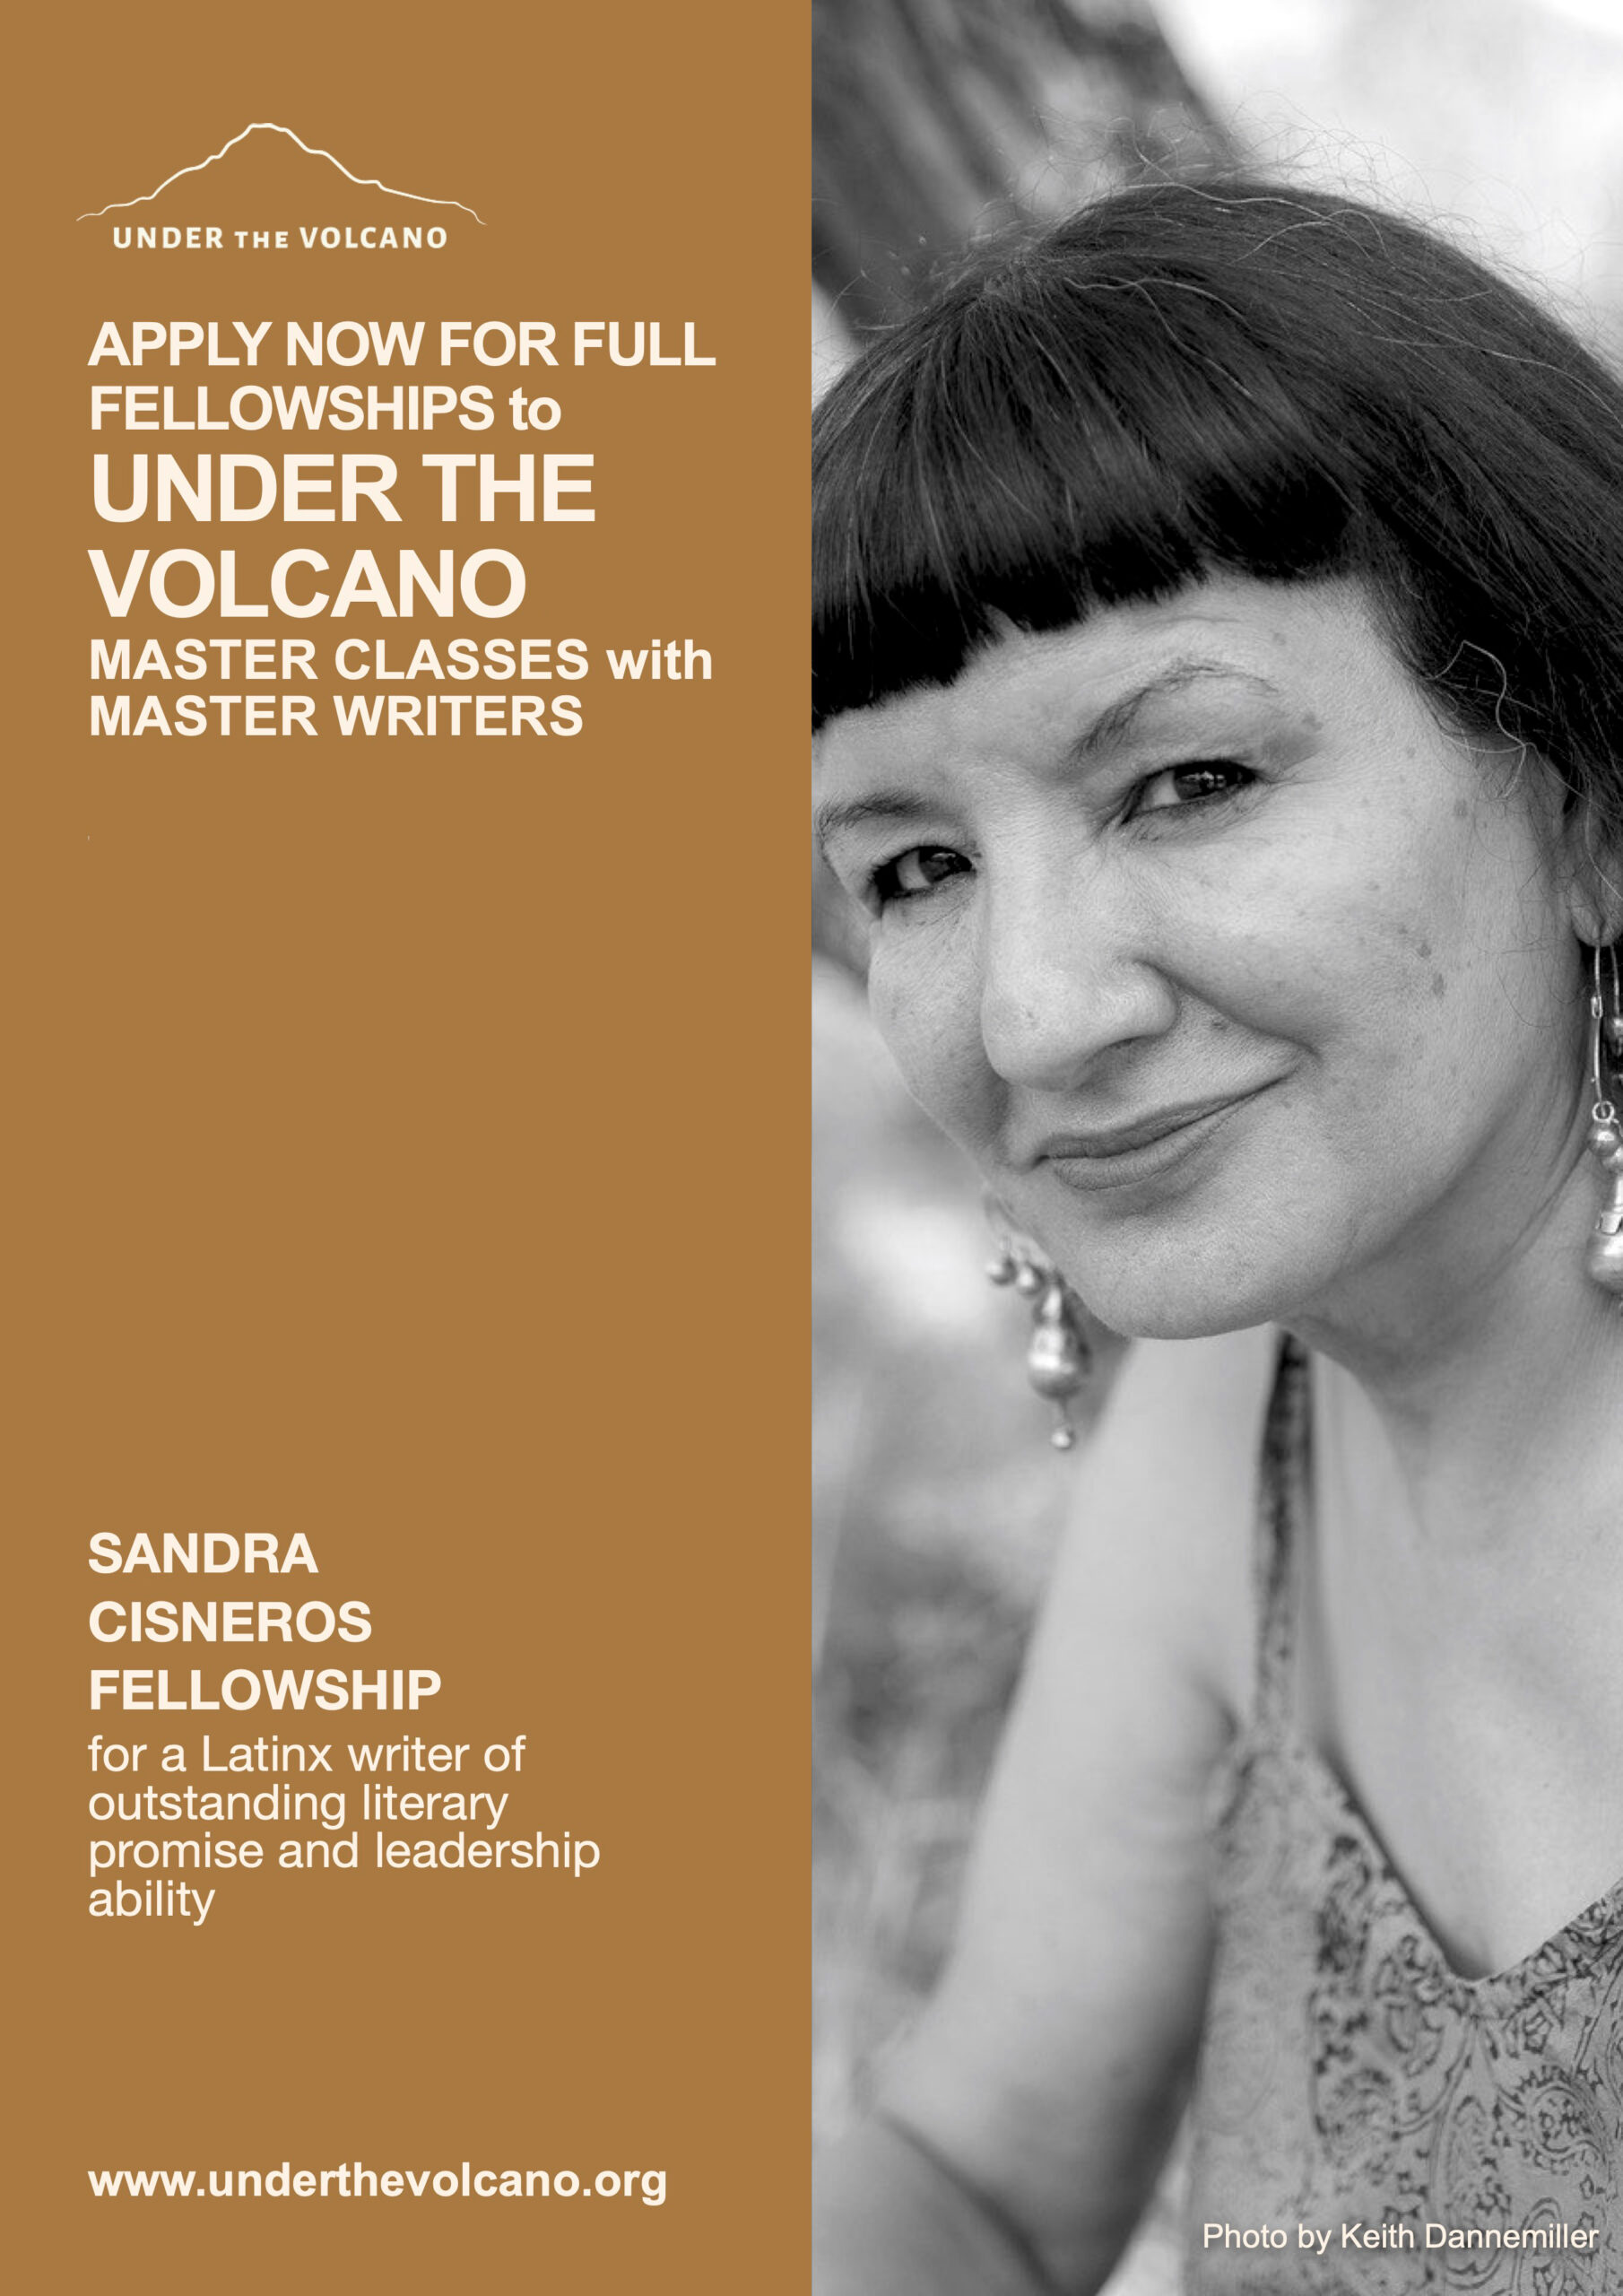 The Sandra Cisneros Fellowship